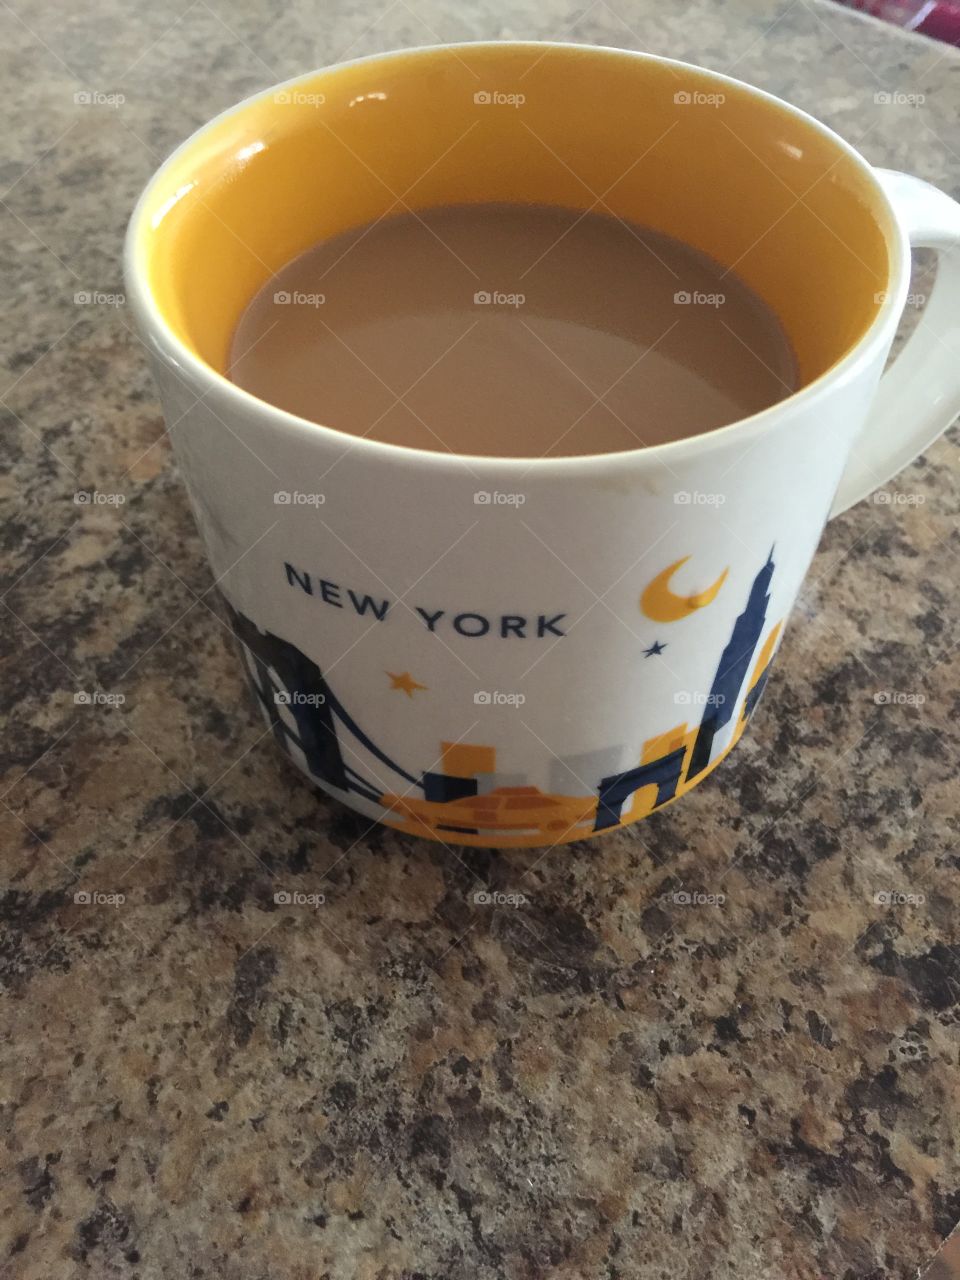 Coconut cream coffee in a Starbucks New York mug